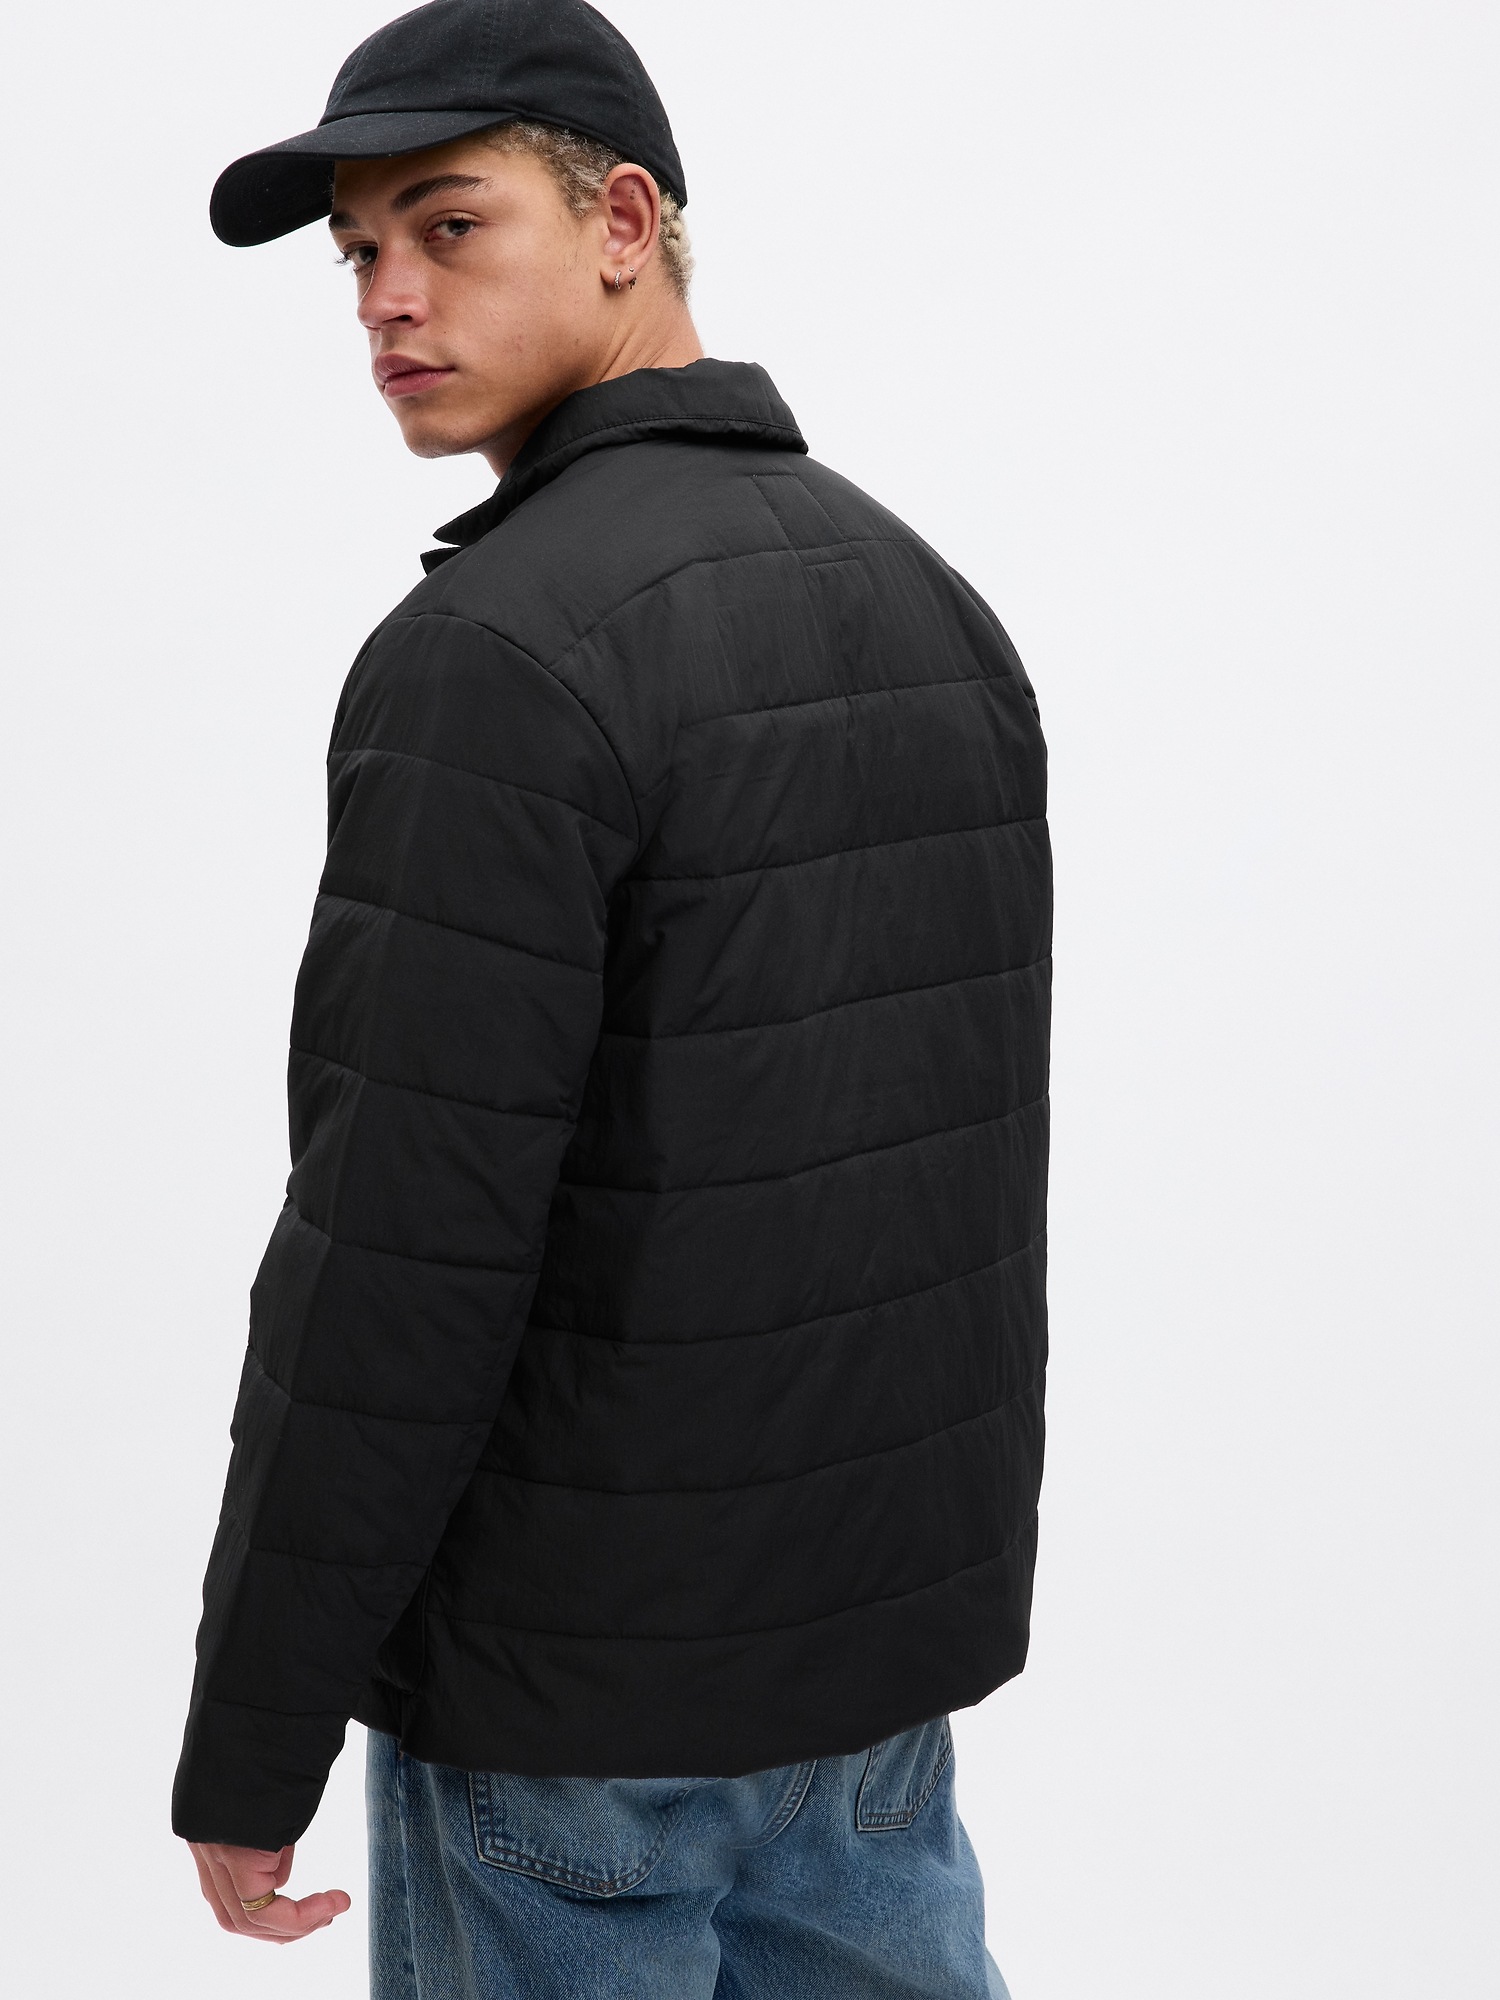 Gap Fit Mens Hybrid Tech Blazer Jacket - Black - XL - NEW w/Tags